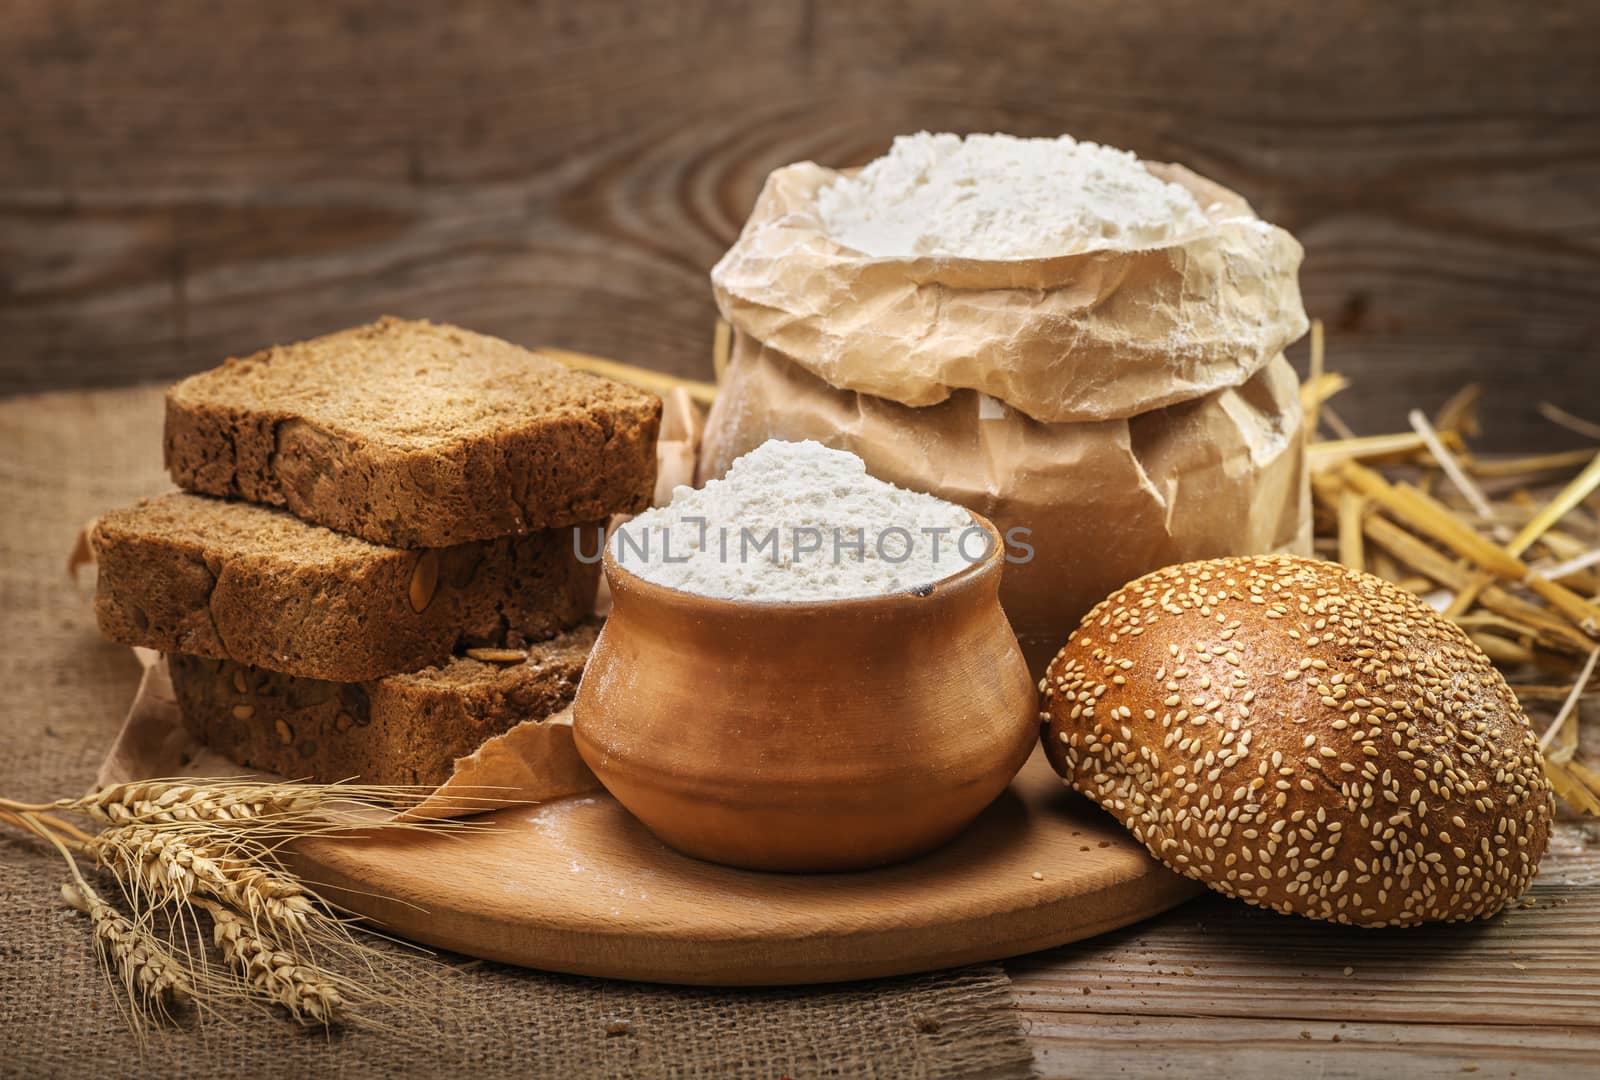 Wheat flour and bread by iprachenko